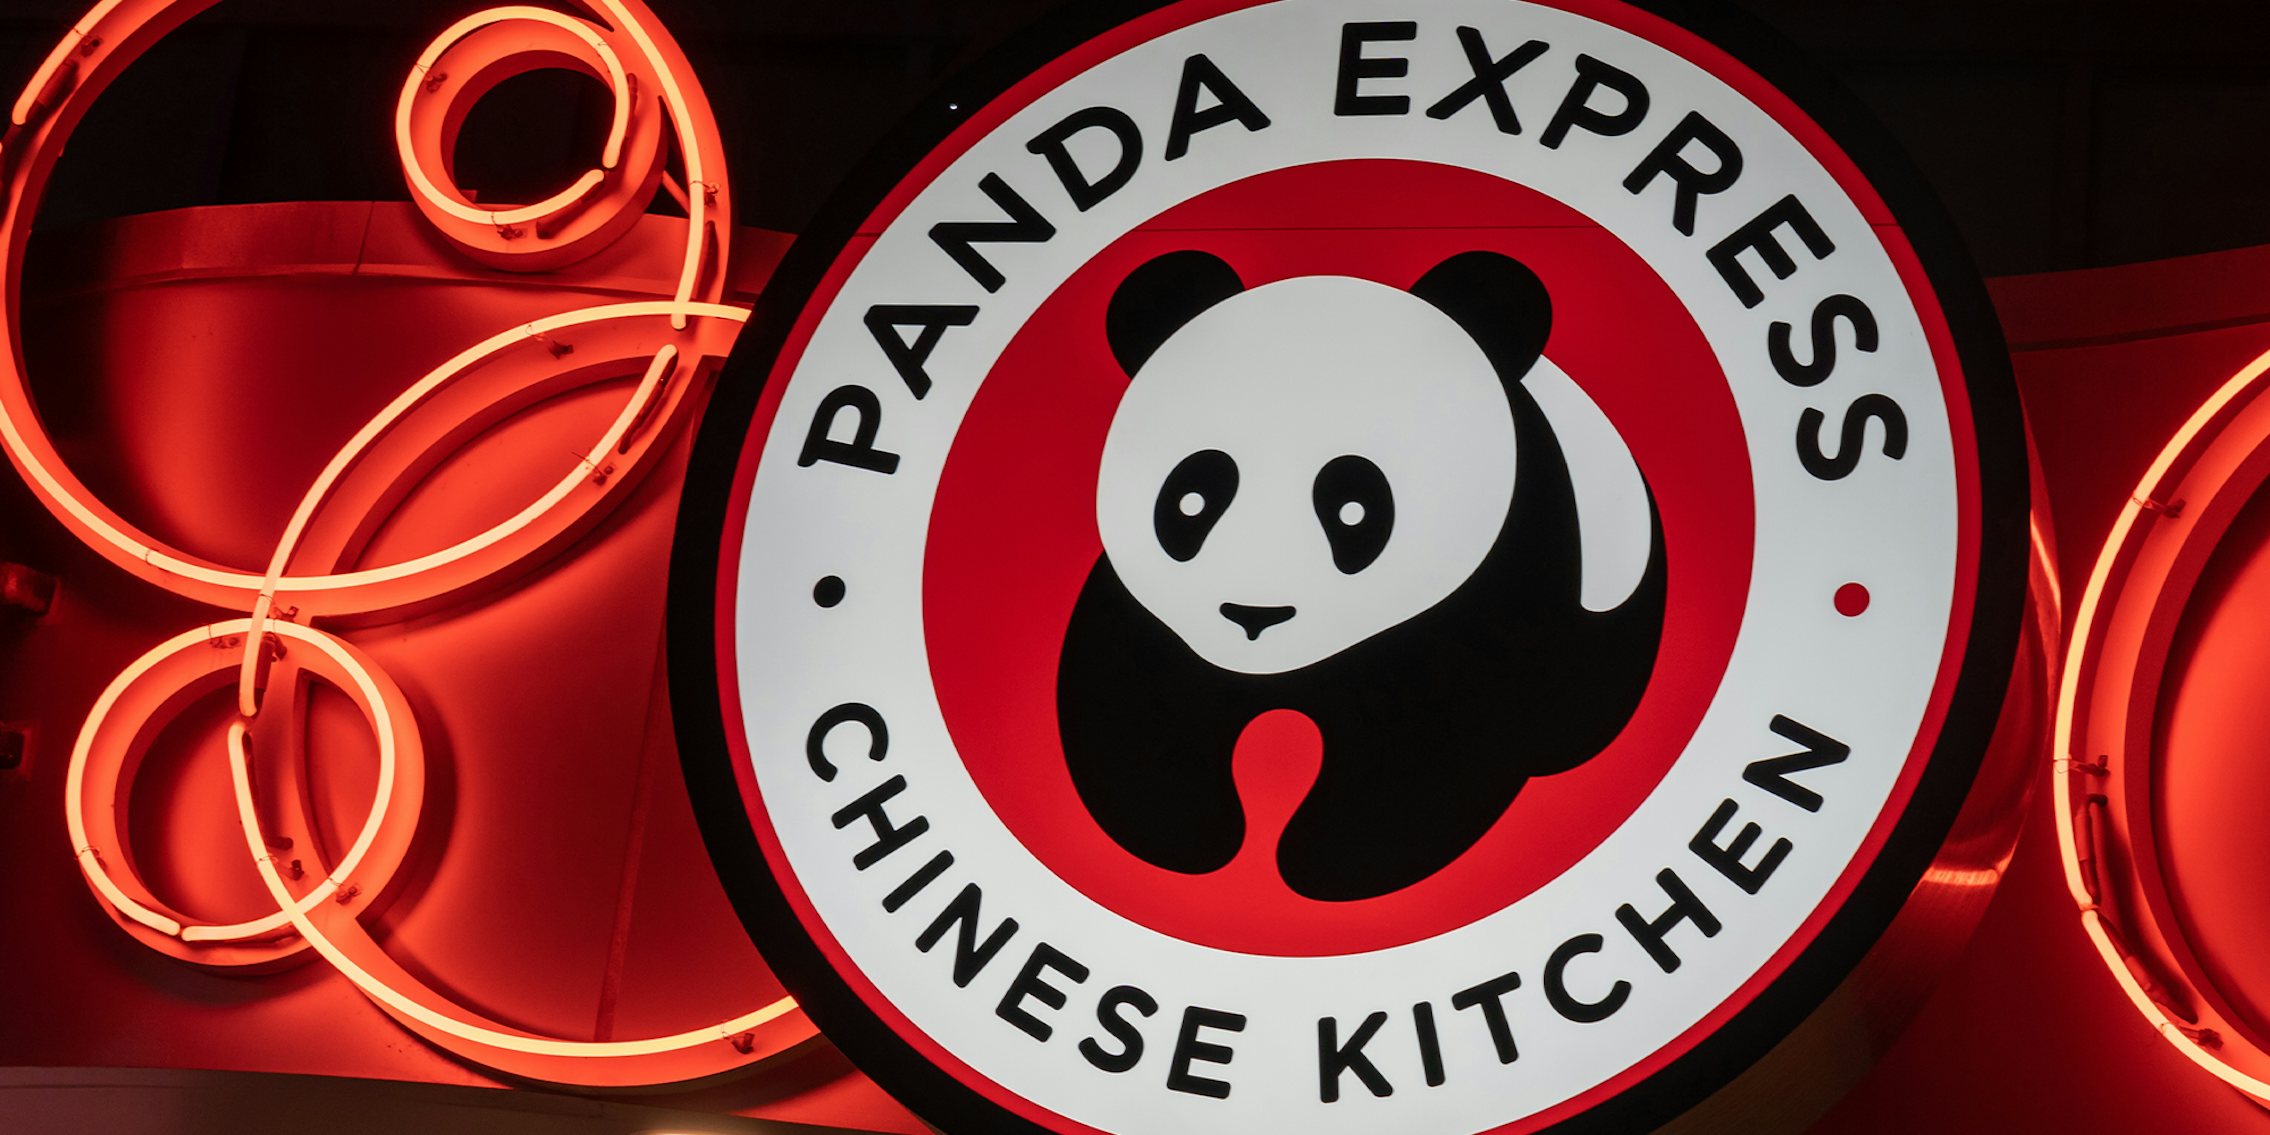 Panda Express logo in the night is shown in Orlando, FL, USA.